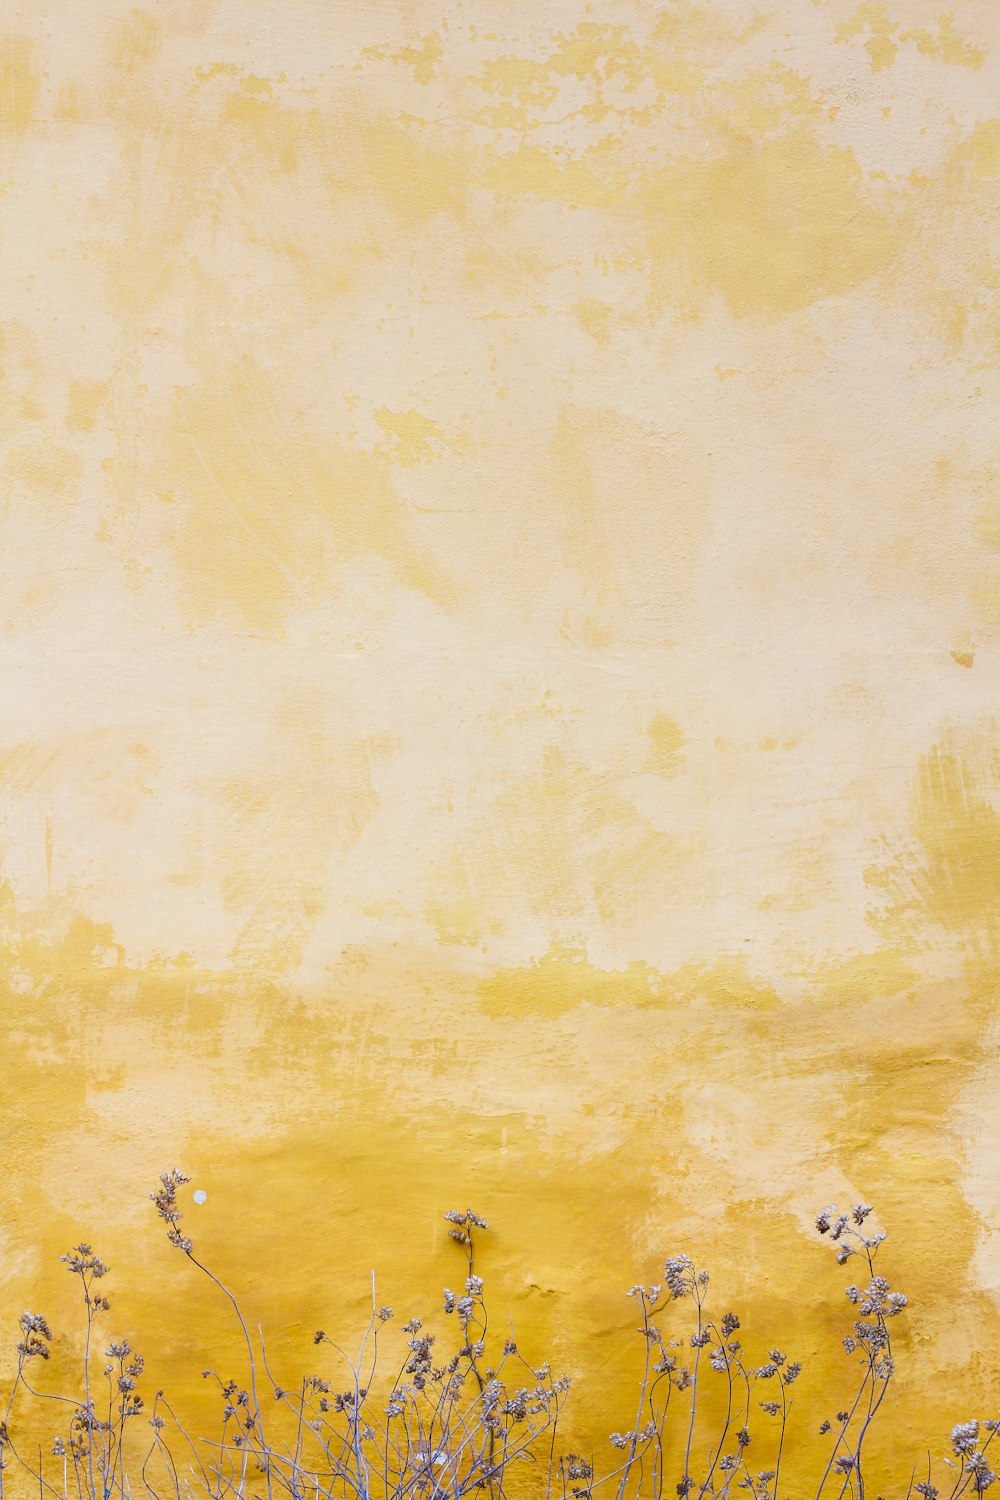 flowers beside yellow wall photo – Free Texture Image on Unsplash